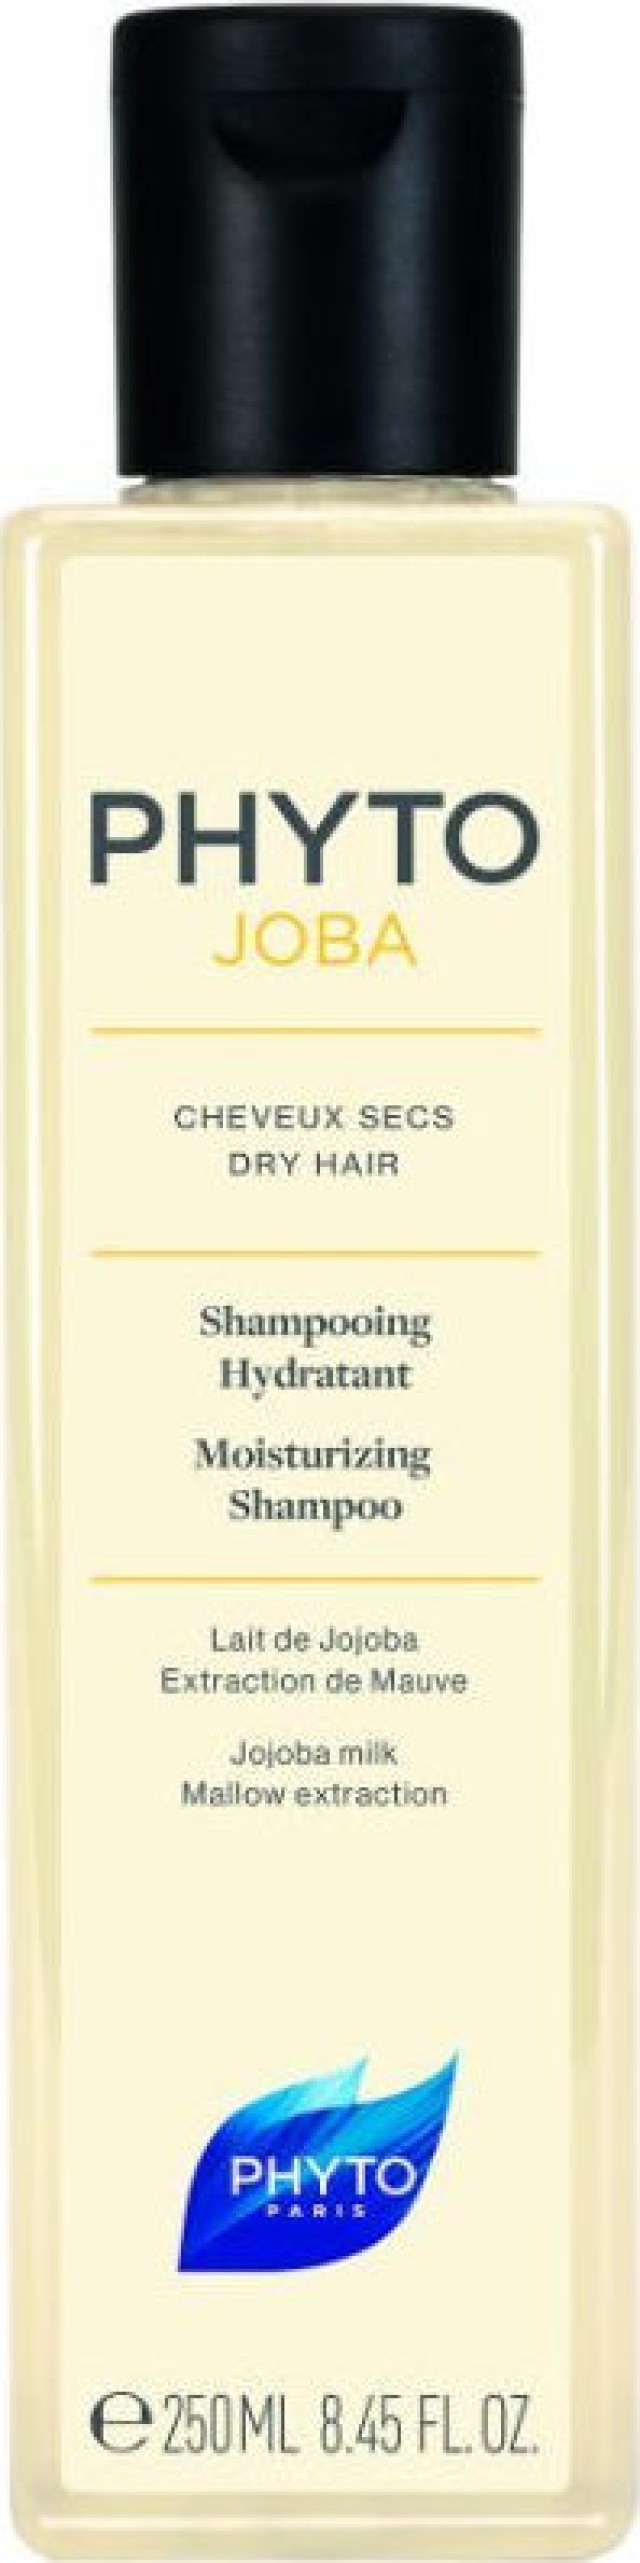 PHYTO Joba Dry Hair, Ενυδατικό Σαμπουάν για Ξηρά Μαλλιά 250ml